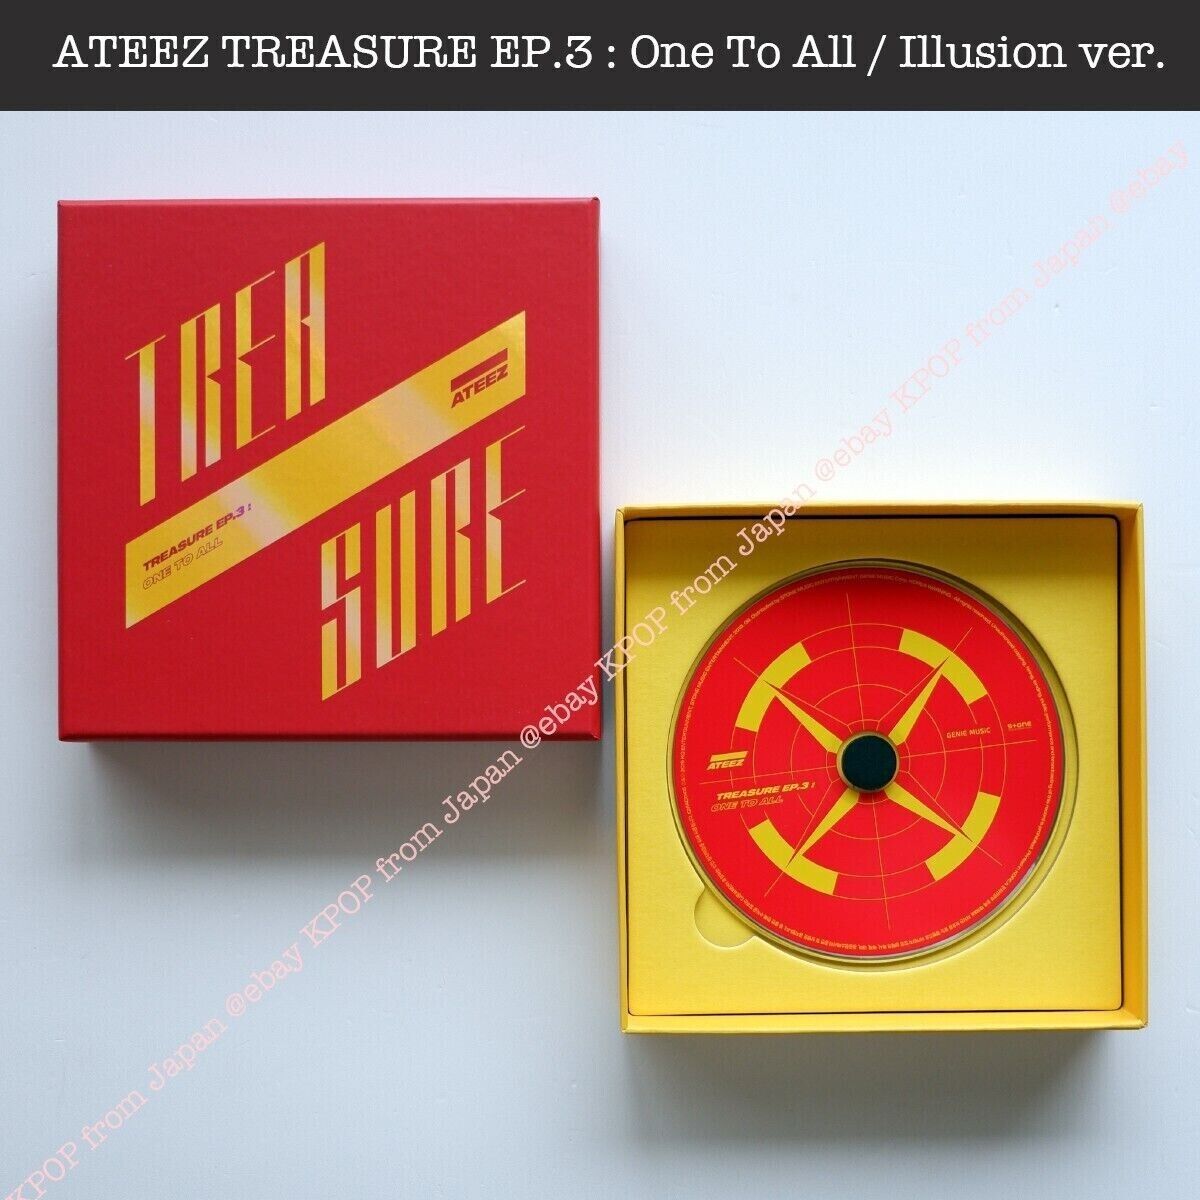 Yeosang ATEEZ TREASURE EP.3 : One To All / illusion ver. Album + Photocard